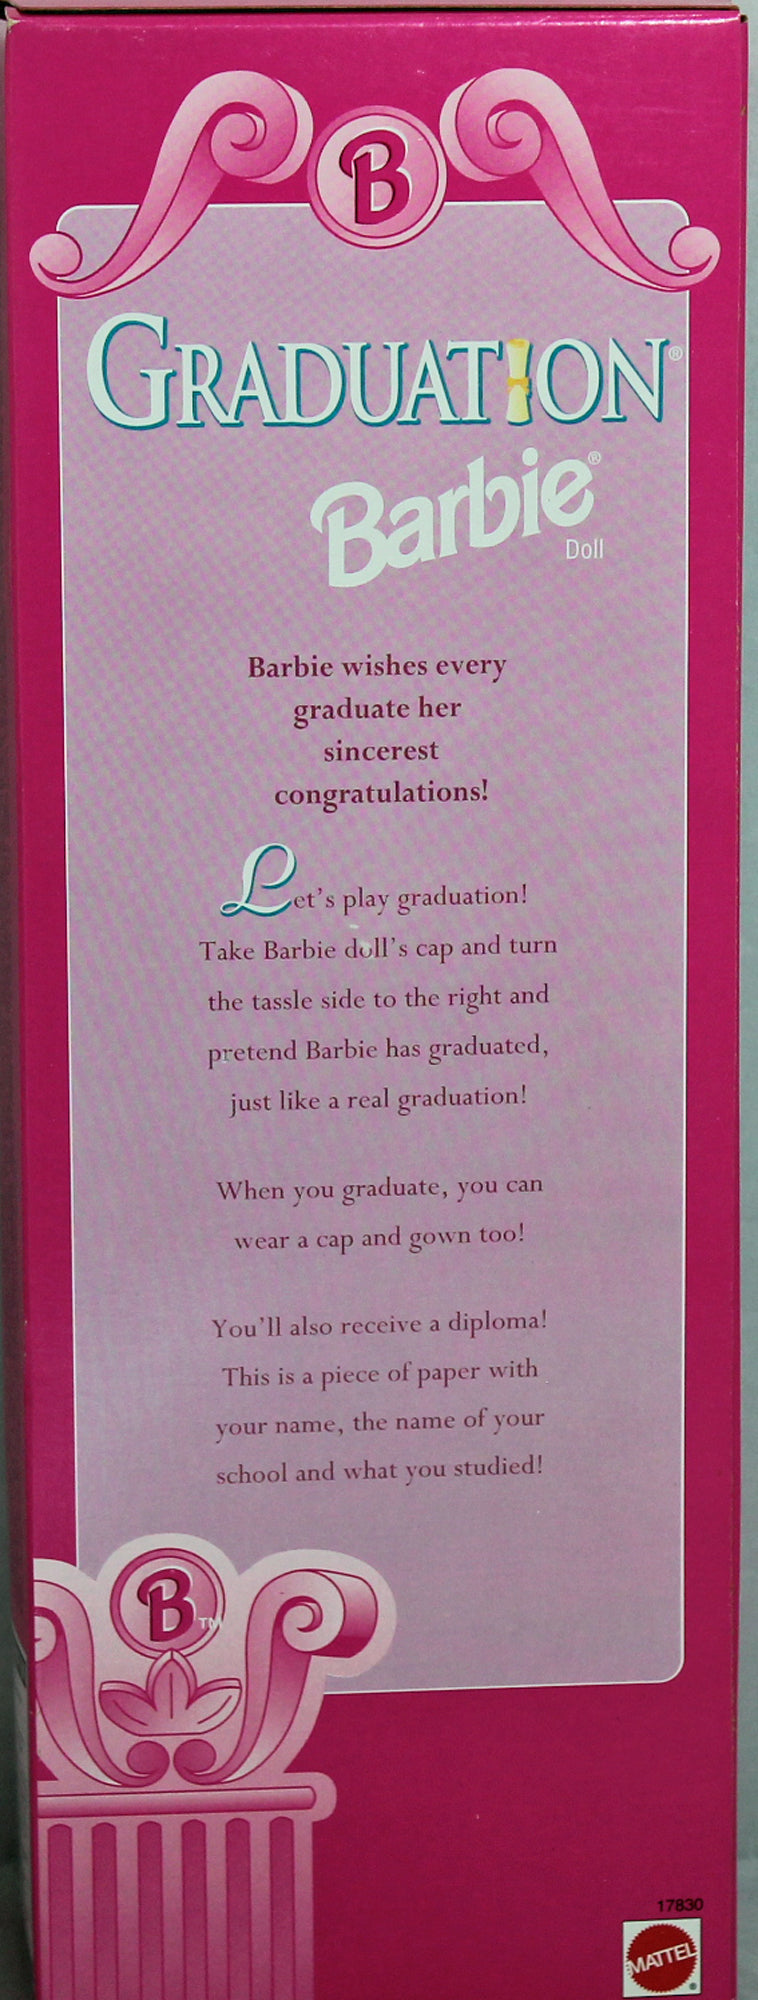 1997 Class of 1998 Graduation Barbie (17830)